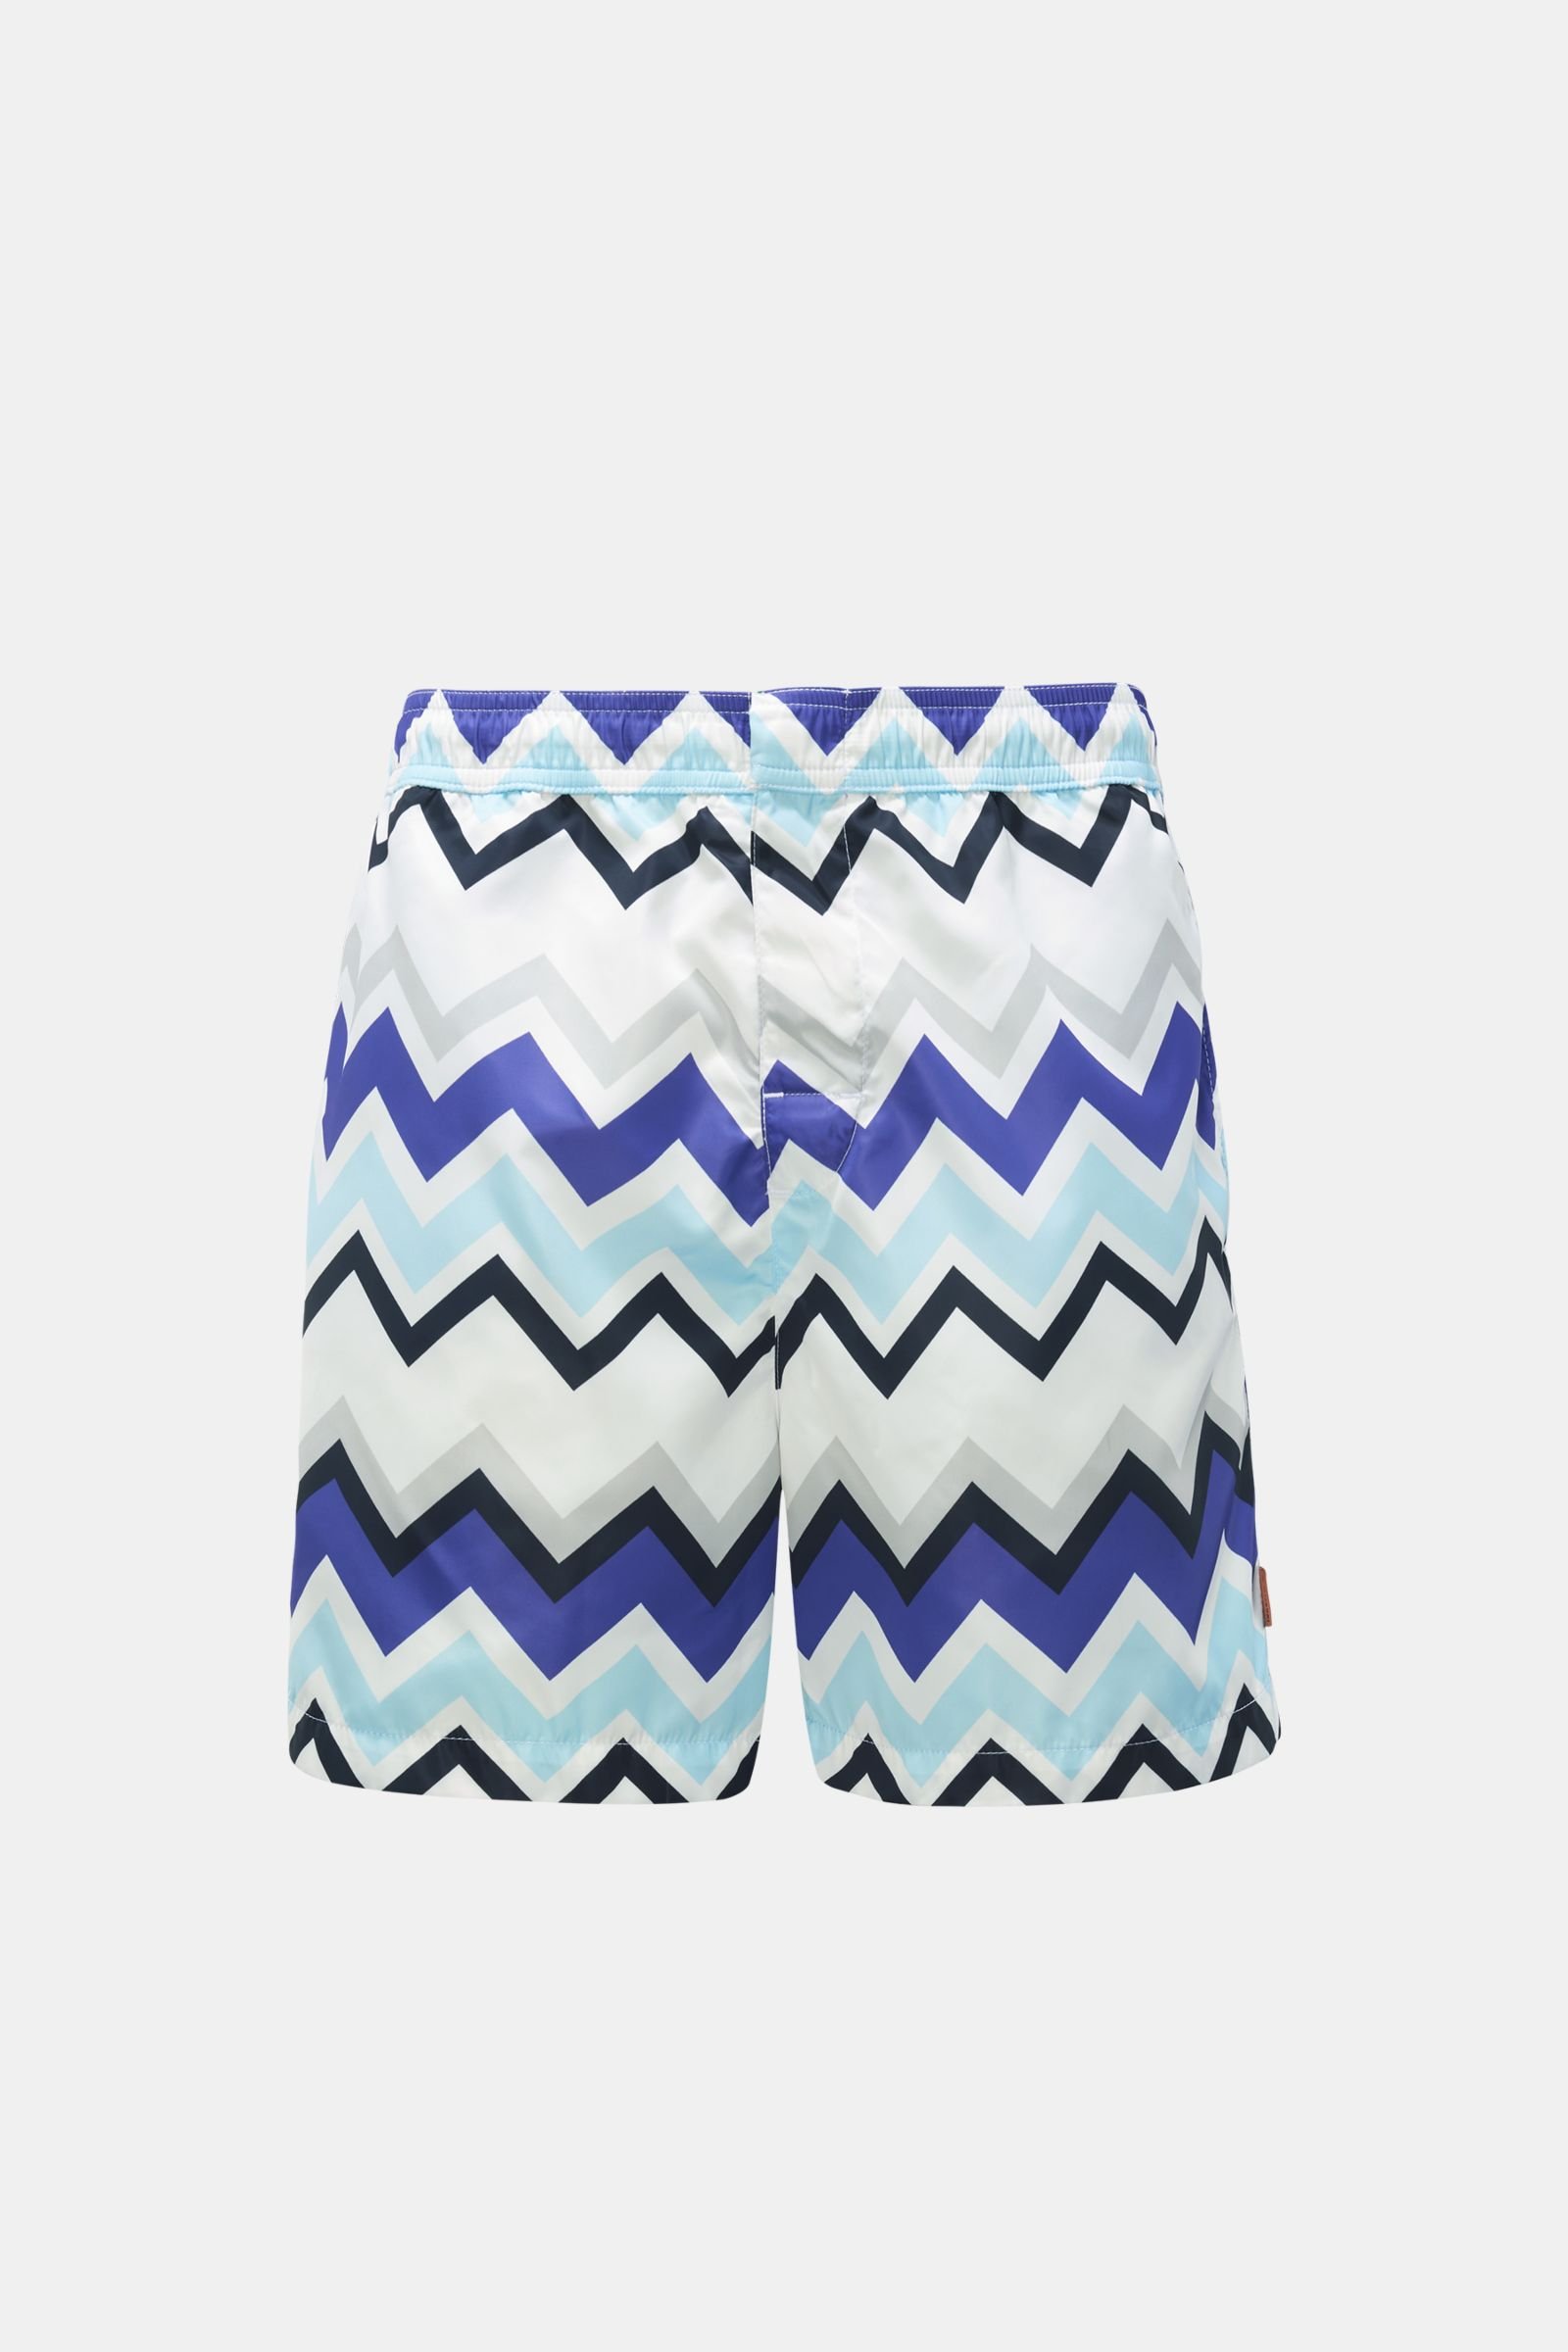 Swim shorts white/light blue/purple patterned